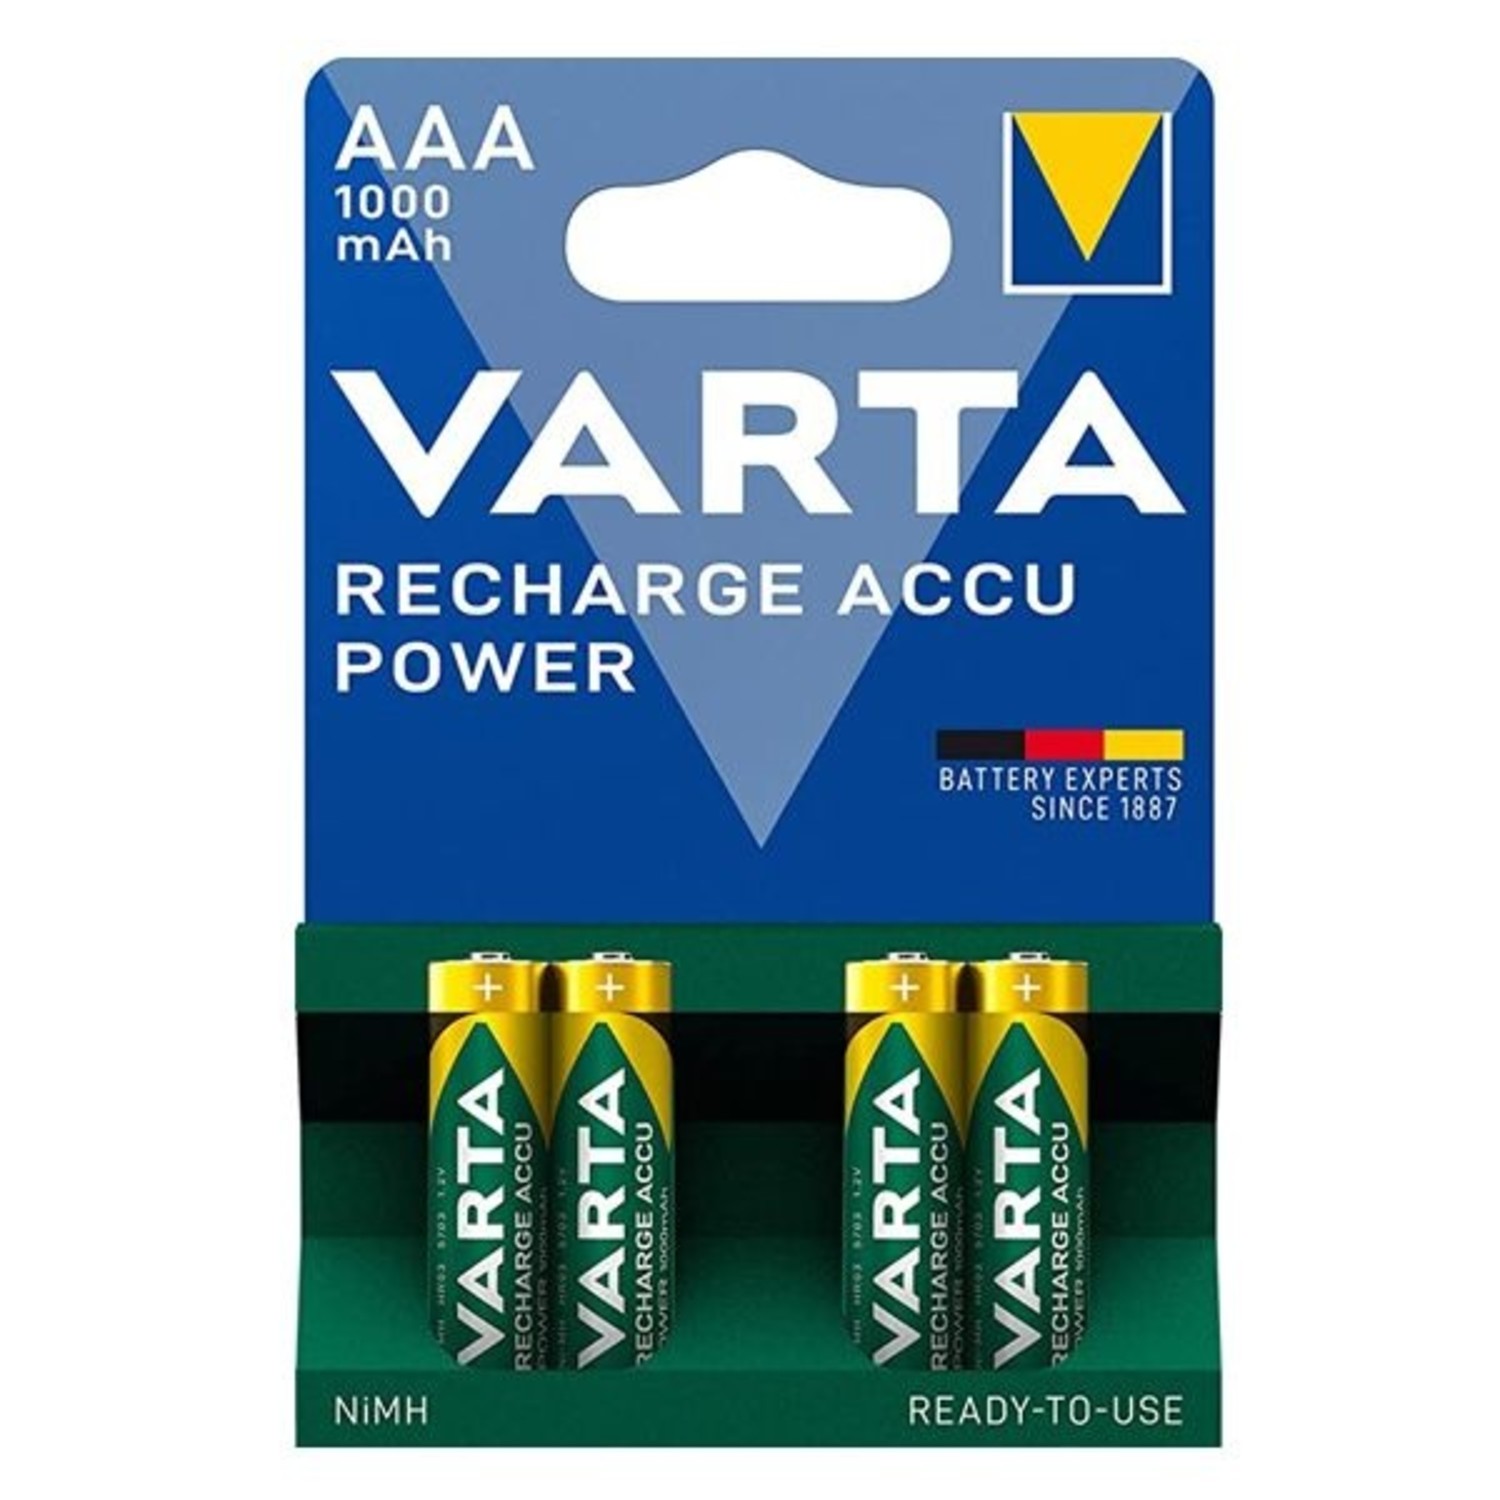 Iets Verlammen schattig Varta oplaadbare AAA batterijen 1000mAh - Batterijenstunter.nl